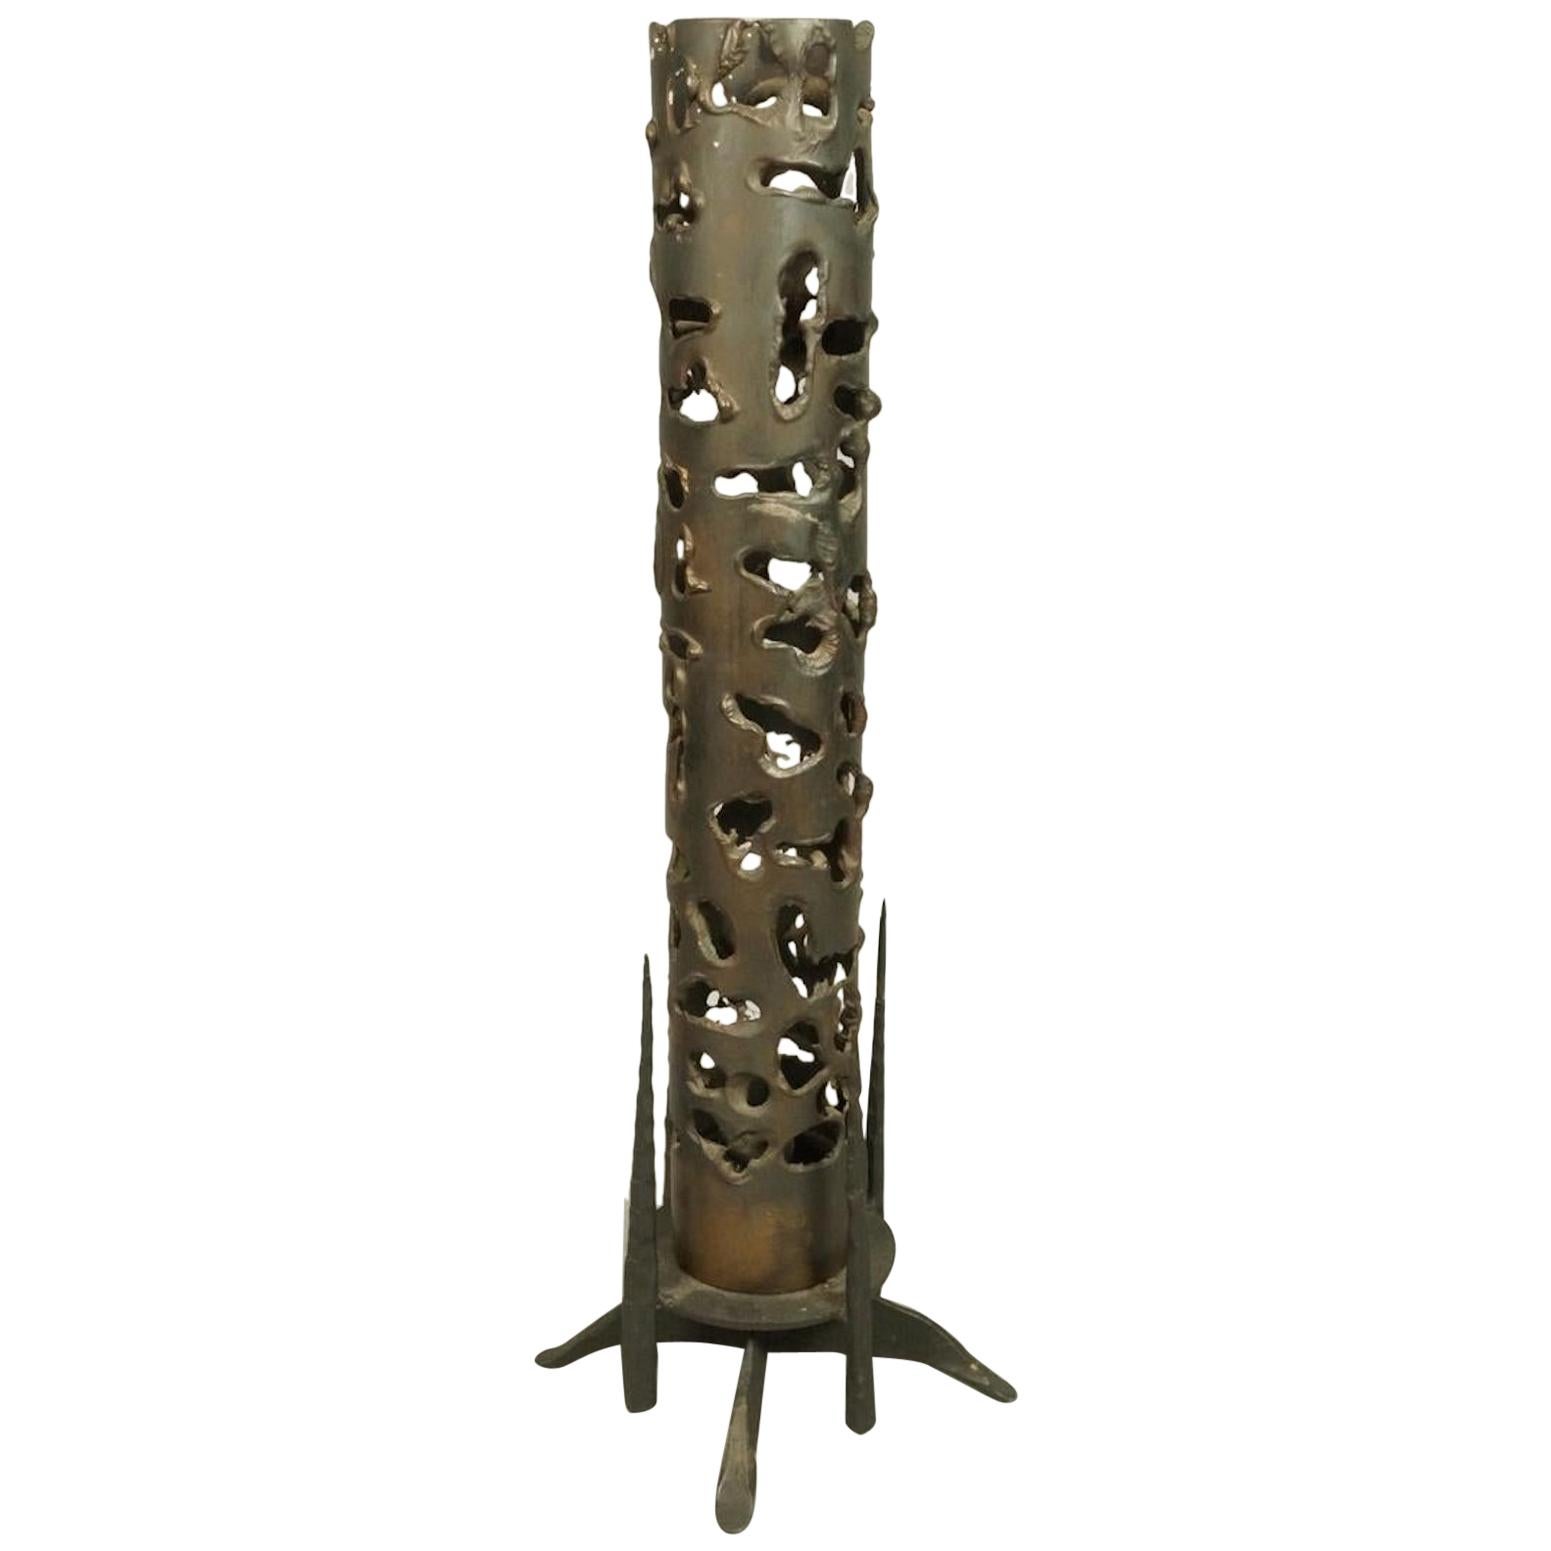 David Palumbo Brutalist Iron Candleholder For Sale